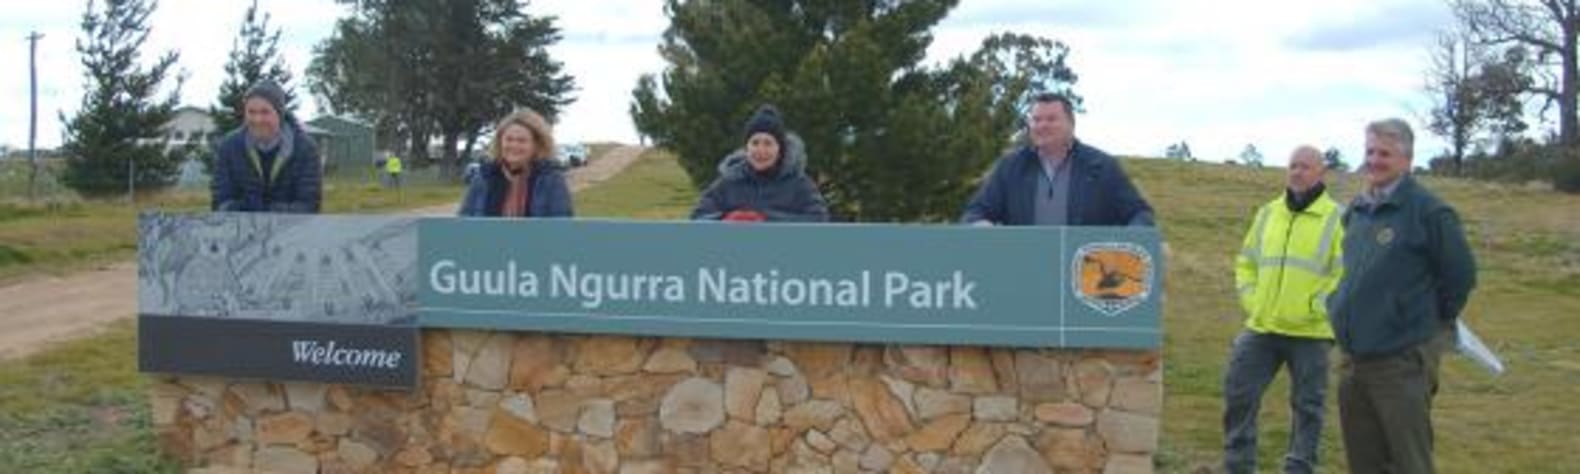 Guula Ngurra National Park